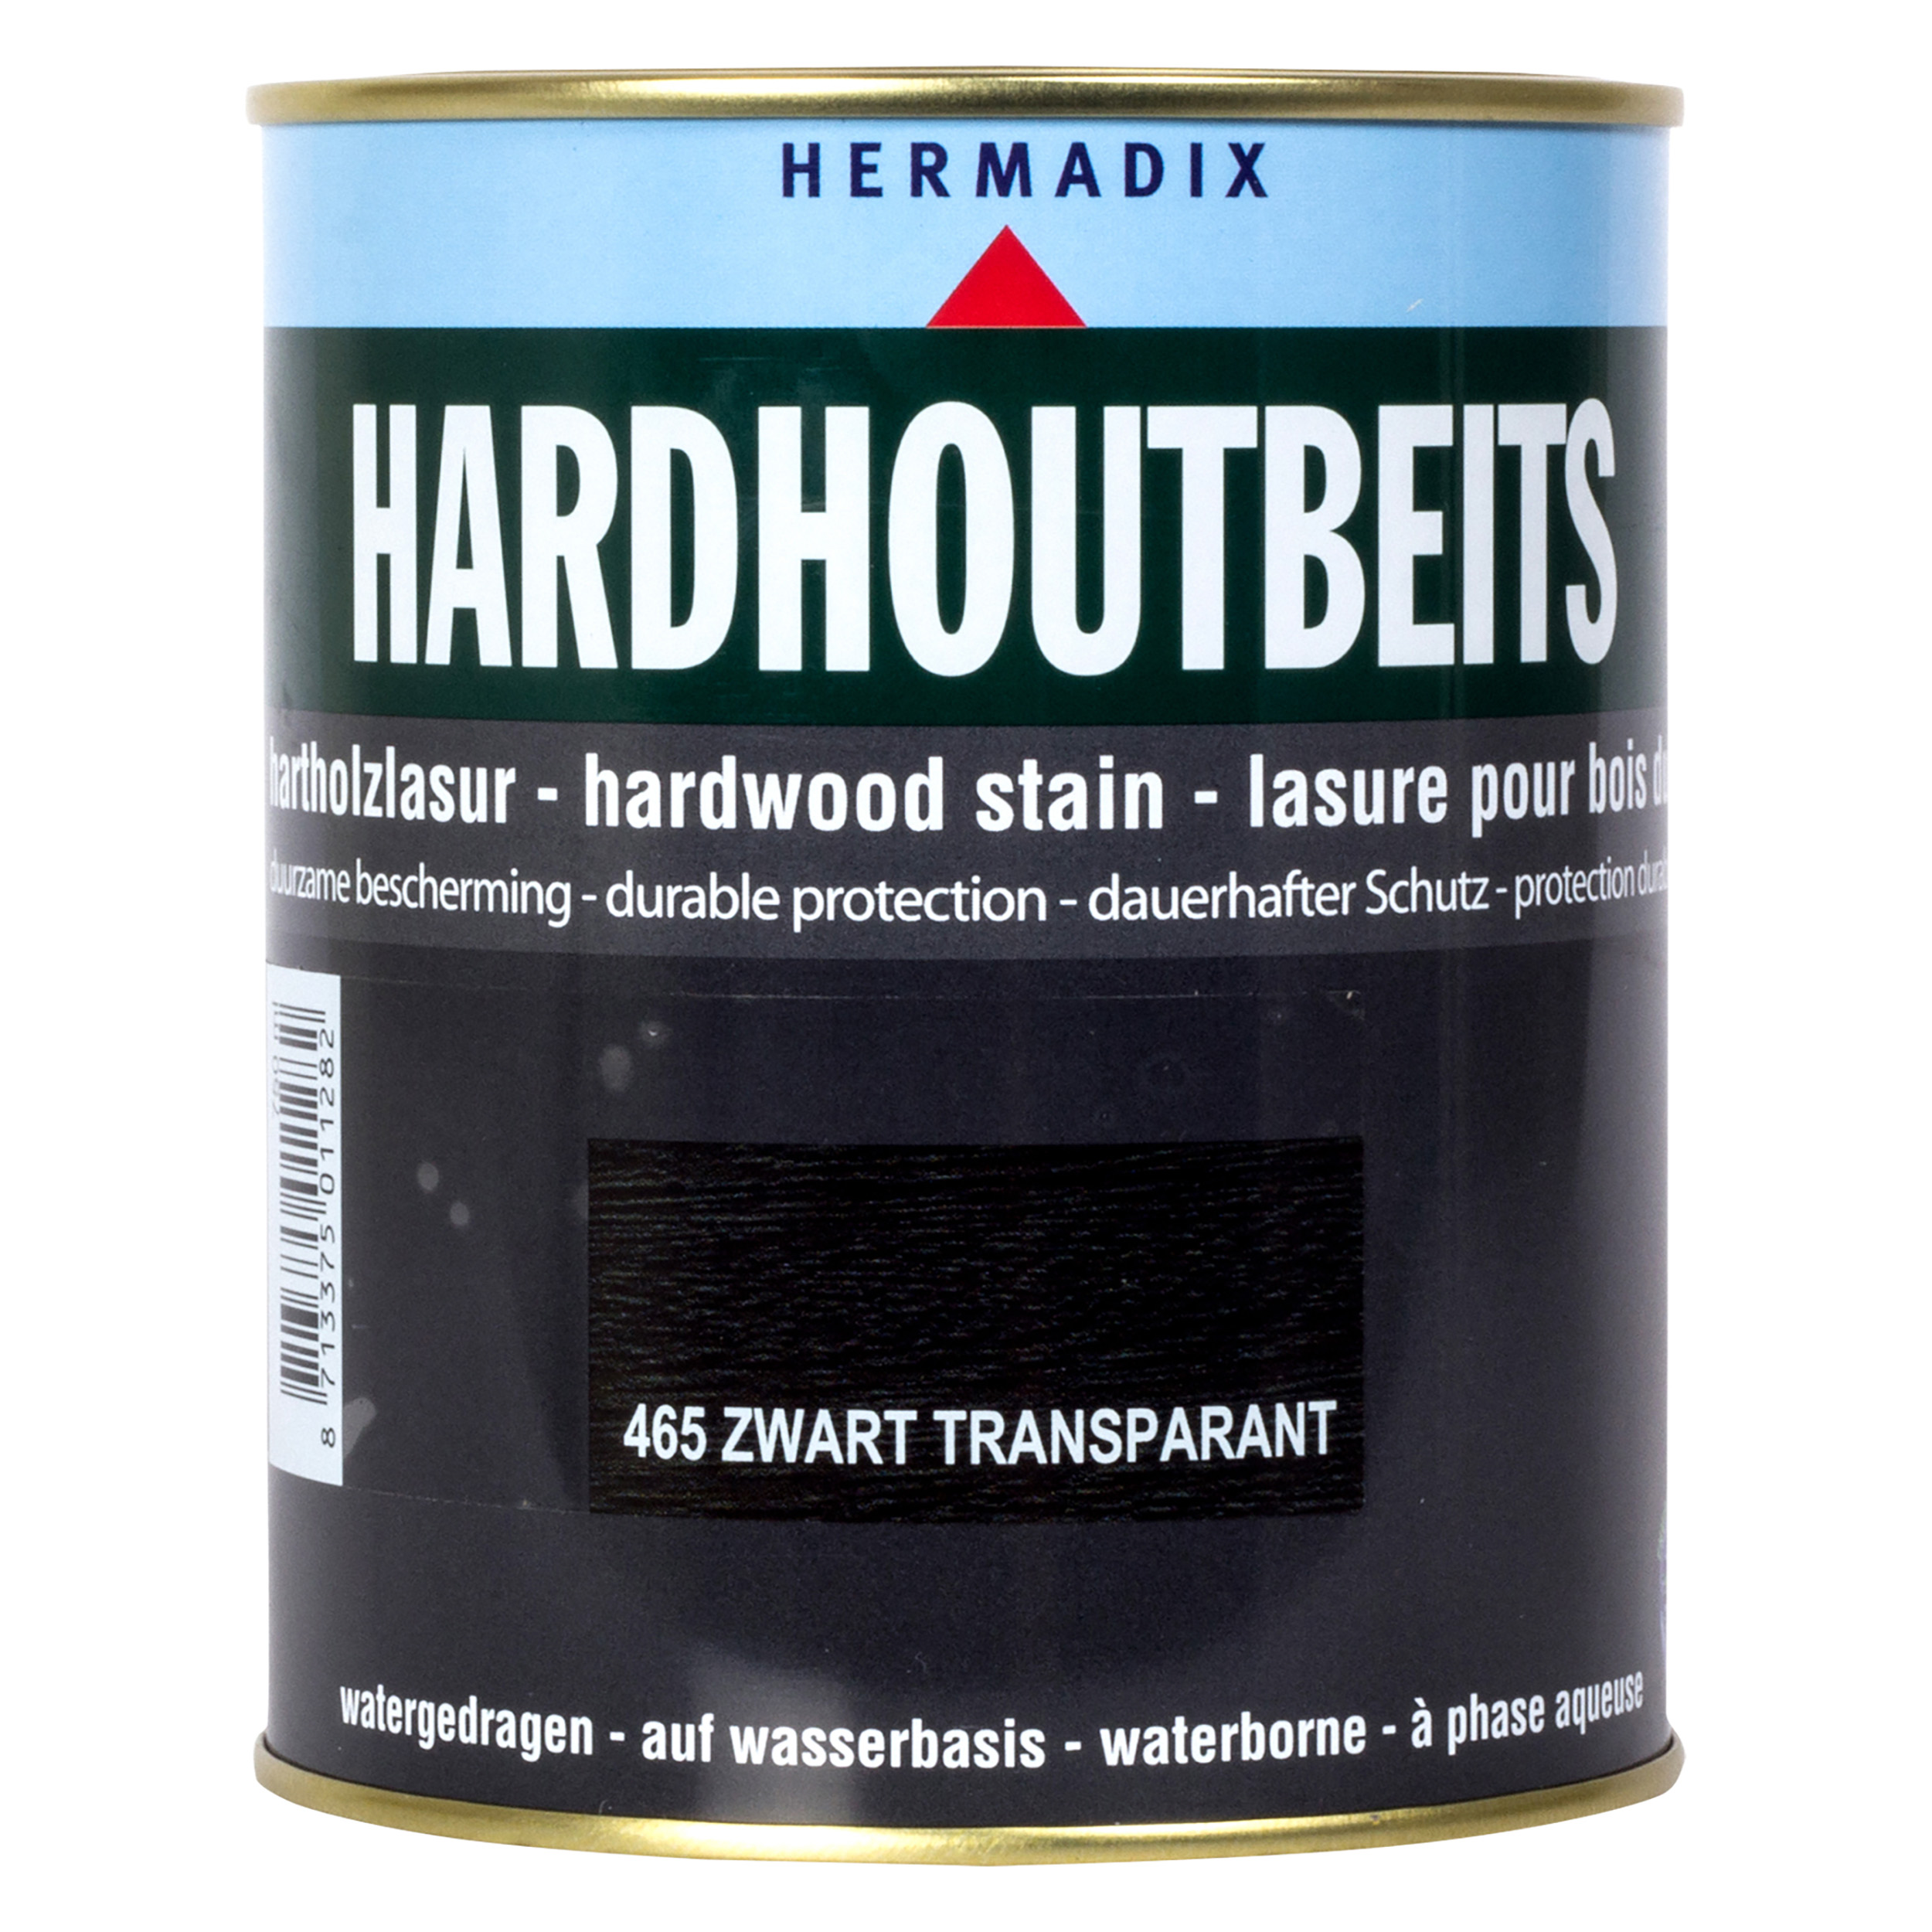 25.846.51 Hermadix  hardhoutbeits zijdeglans - 750 ml - zwart transparant (465)